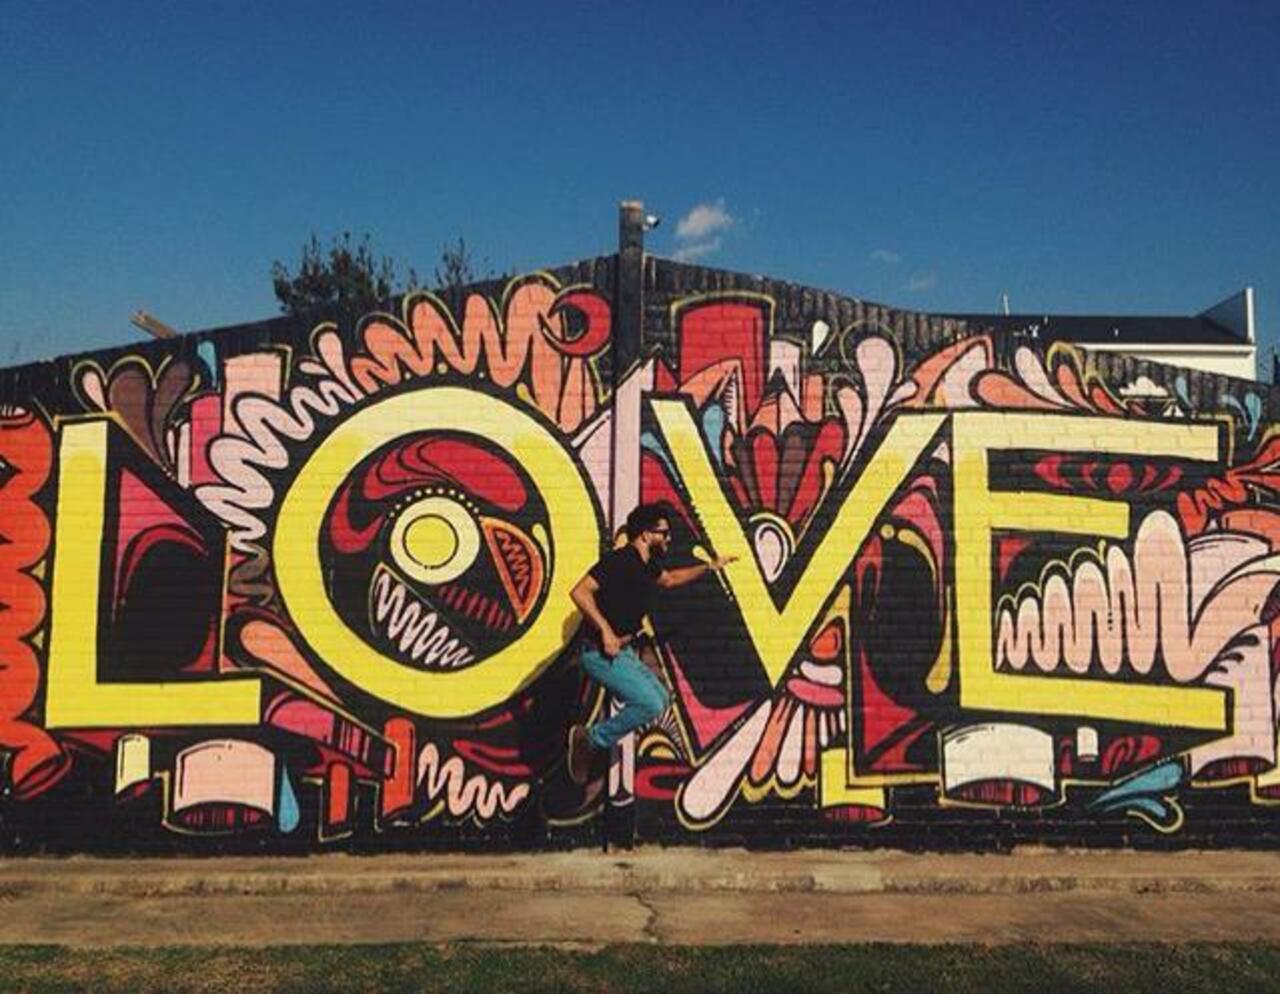 Love ❤️
Street Art by WileyArt

#art #graffiti #mural #streetart http://t.co/pgCXfOTxQf googlestreetart chinatoniq